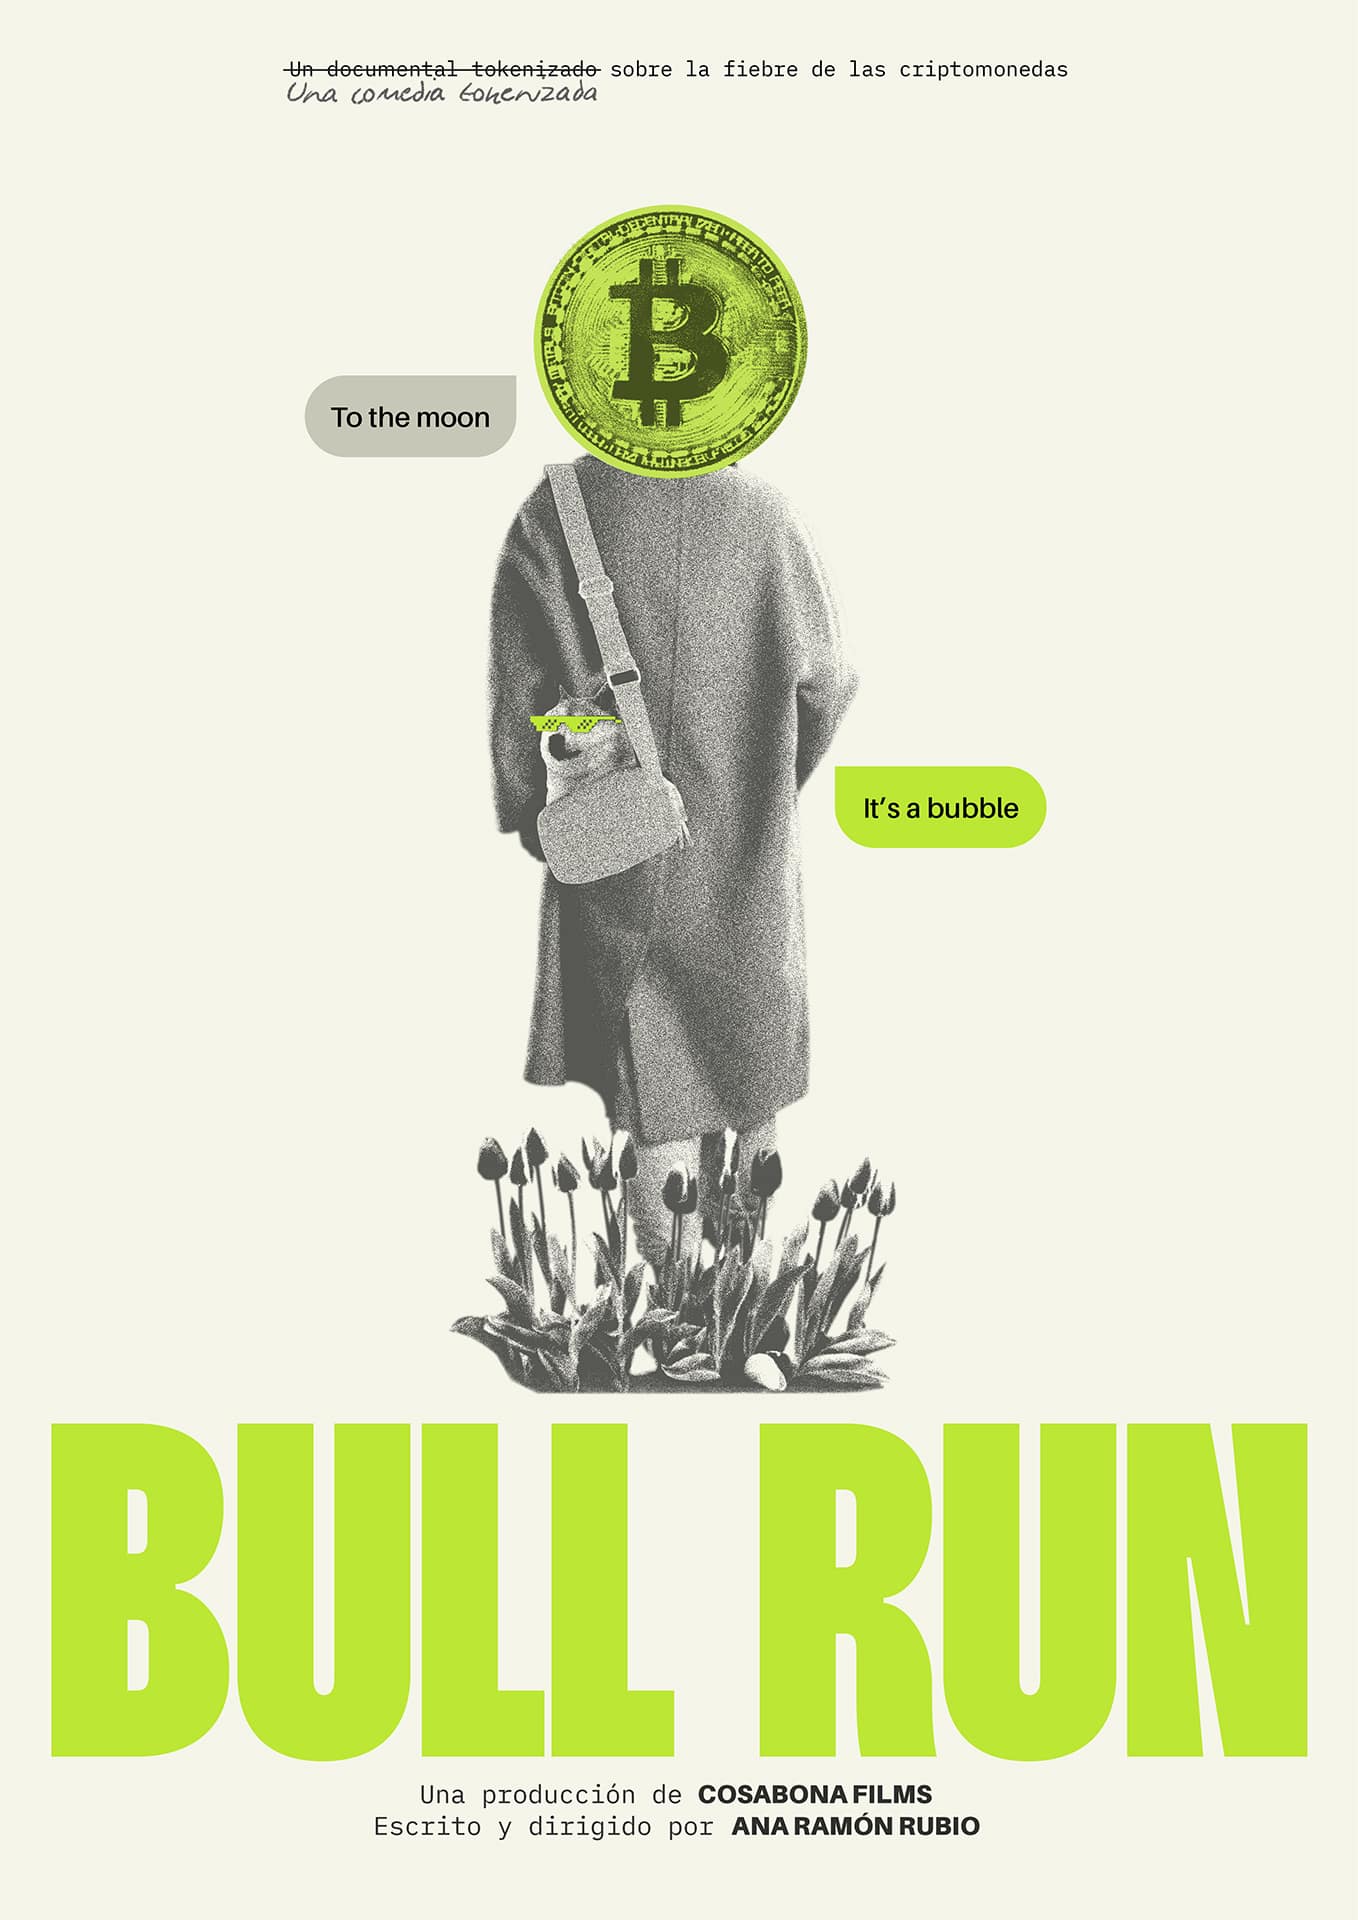 Bull Run primer documental tokenizado